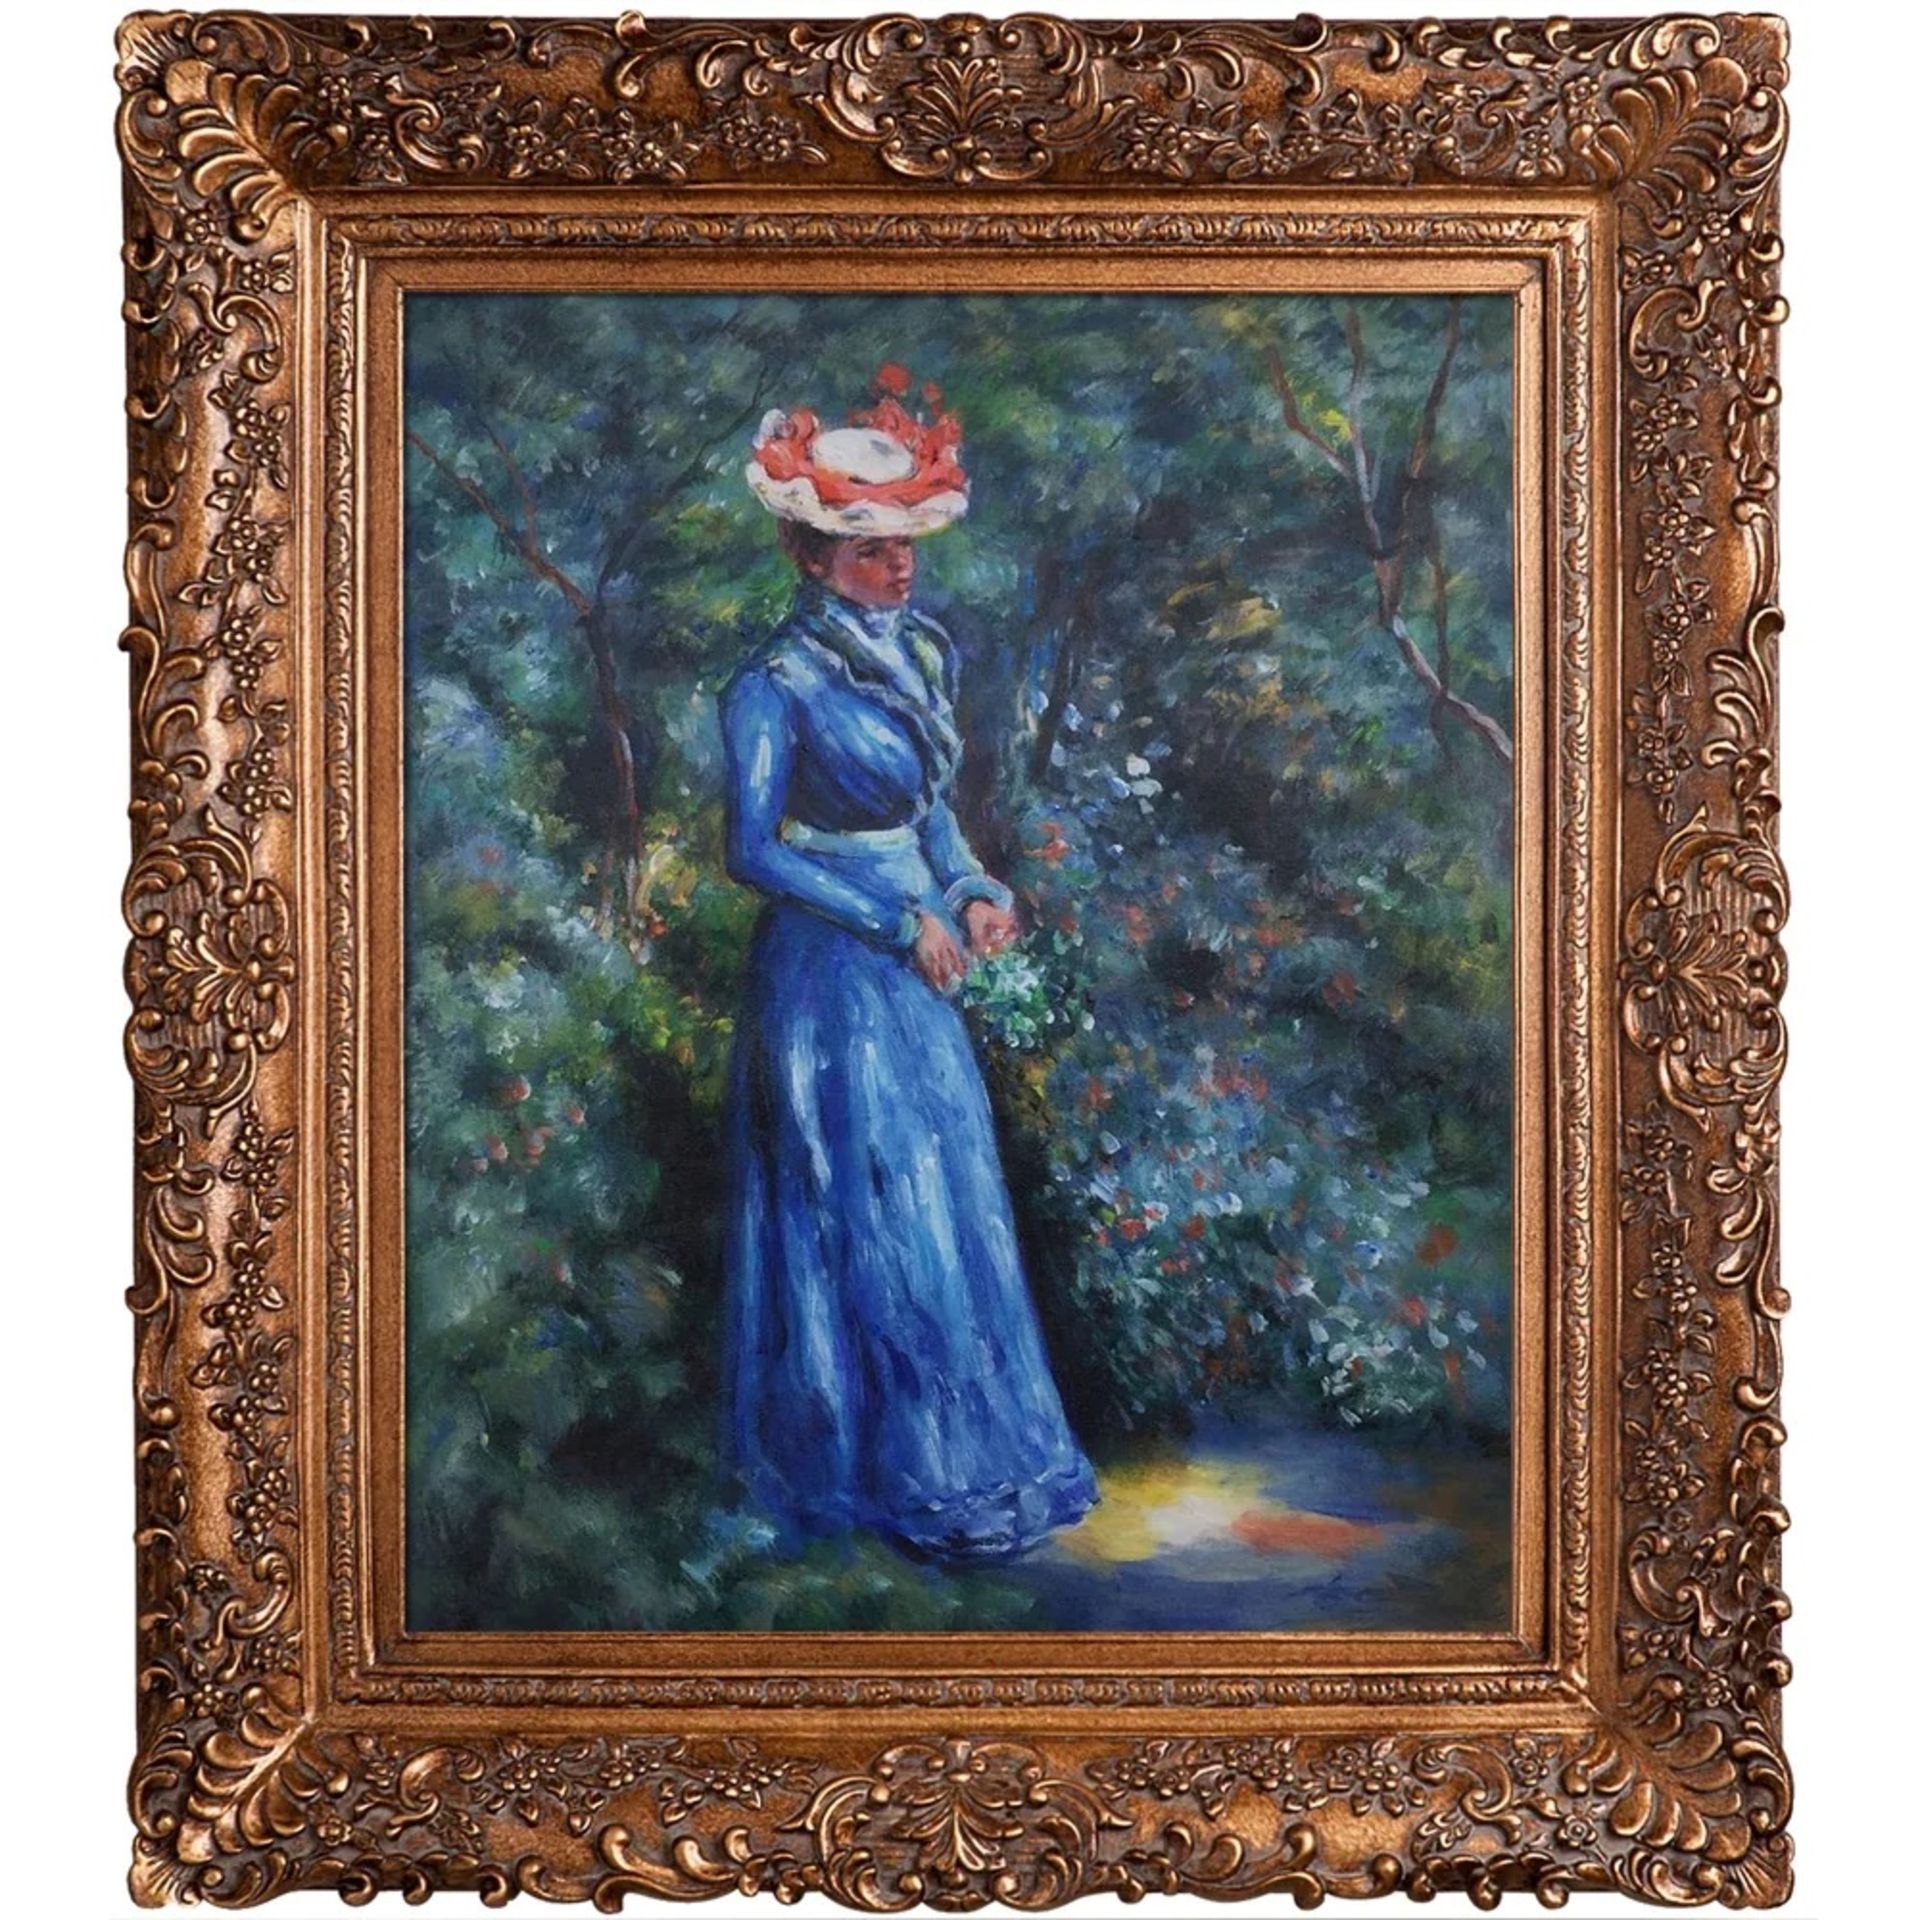 Pierre Auguste Renoir "Woman in a Blue Dress, Standing in the Garden of St. Cloud" Oil Painting,